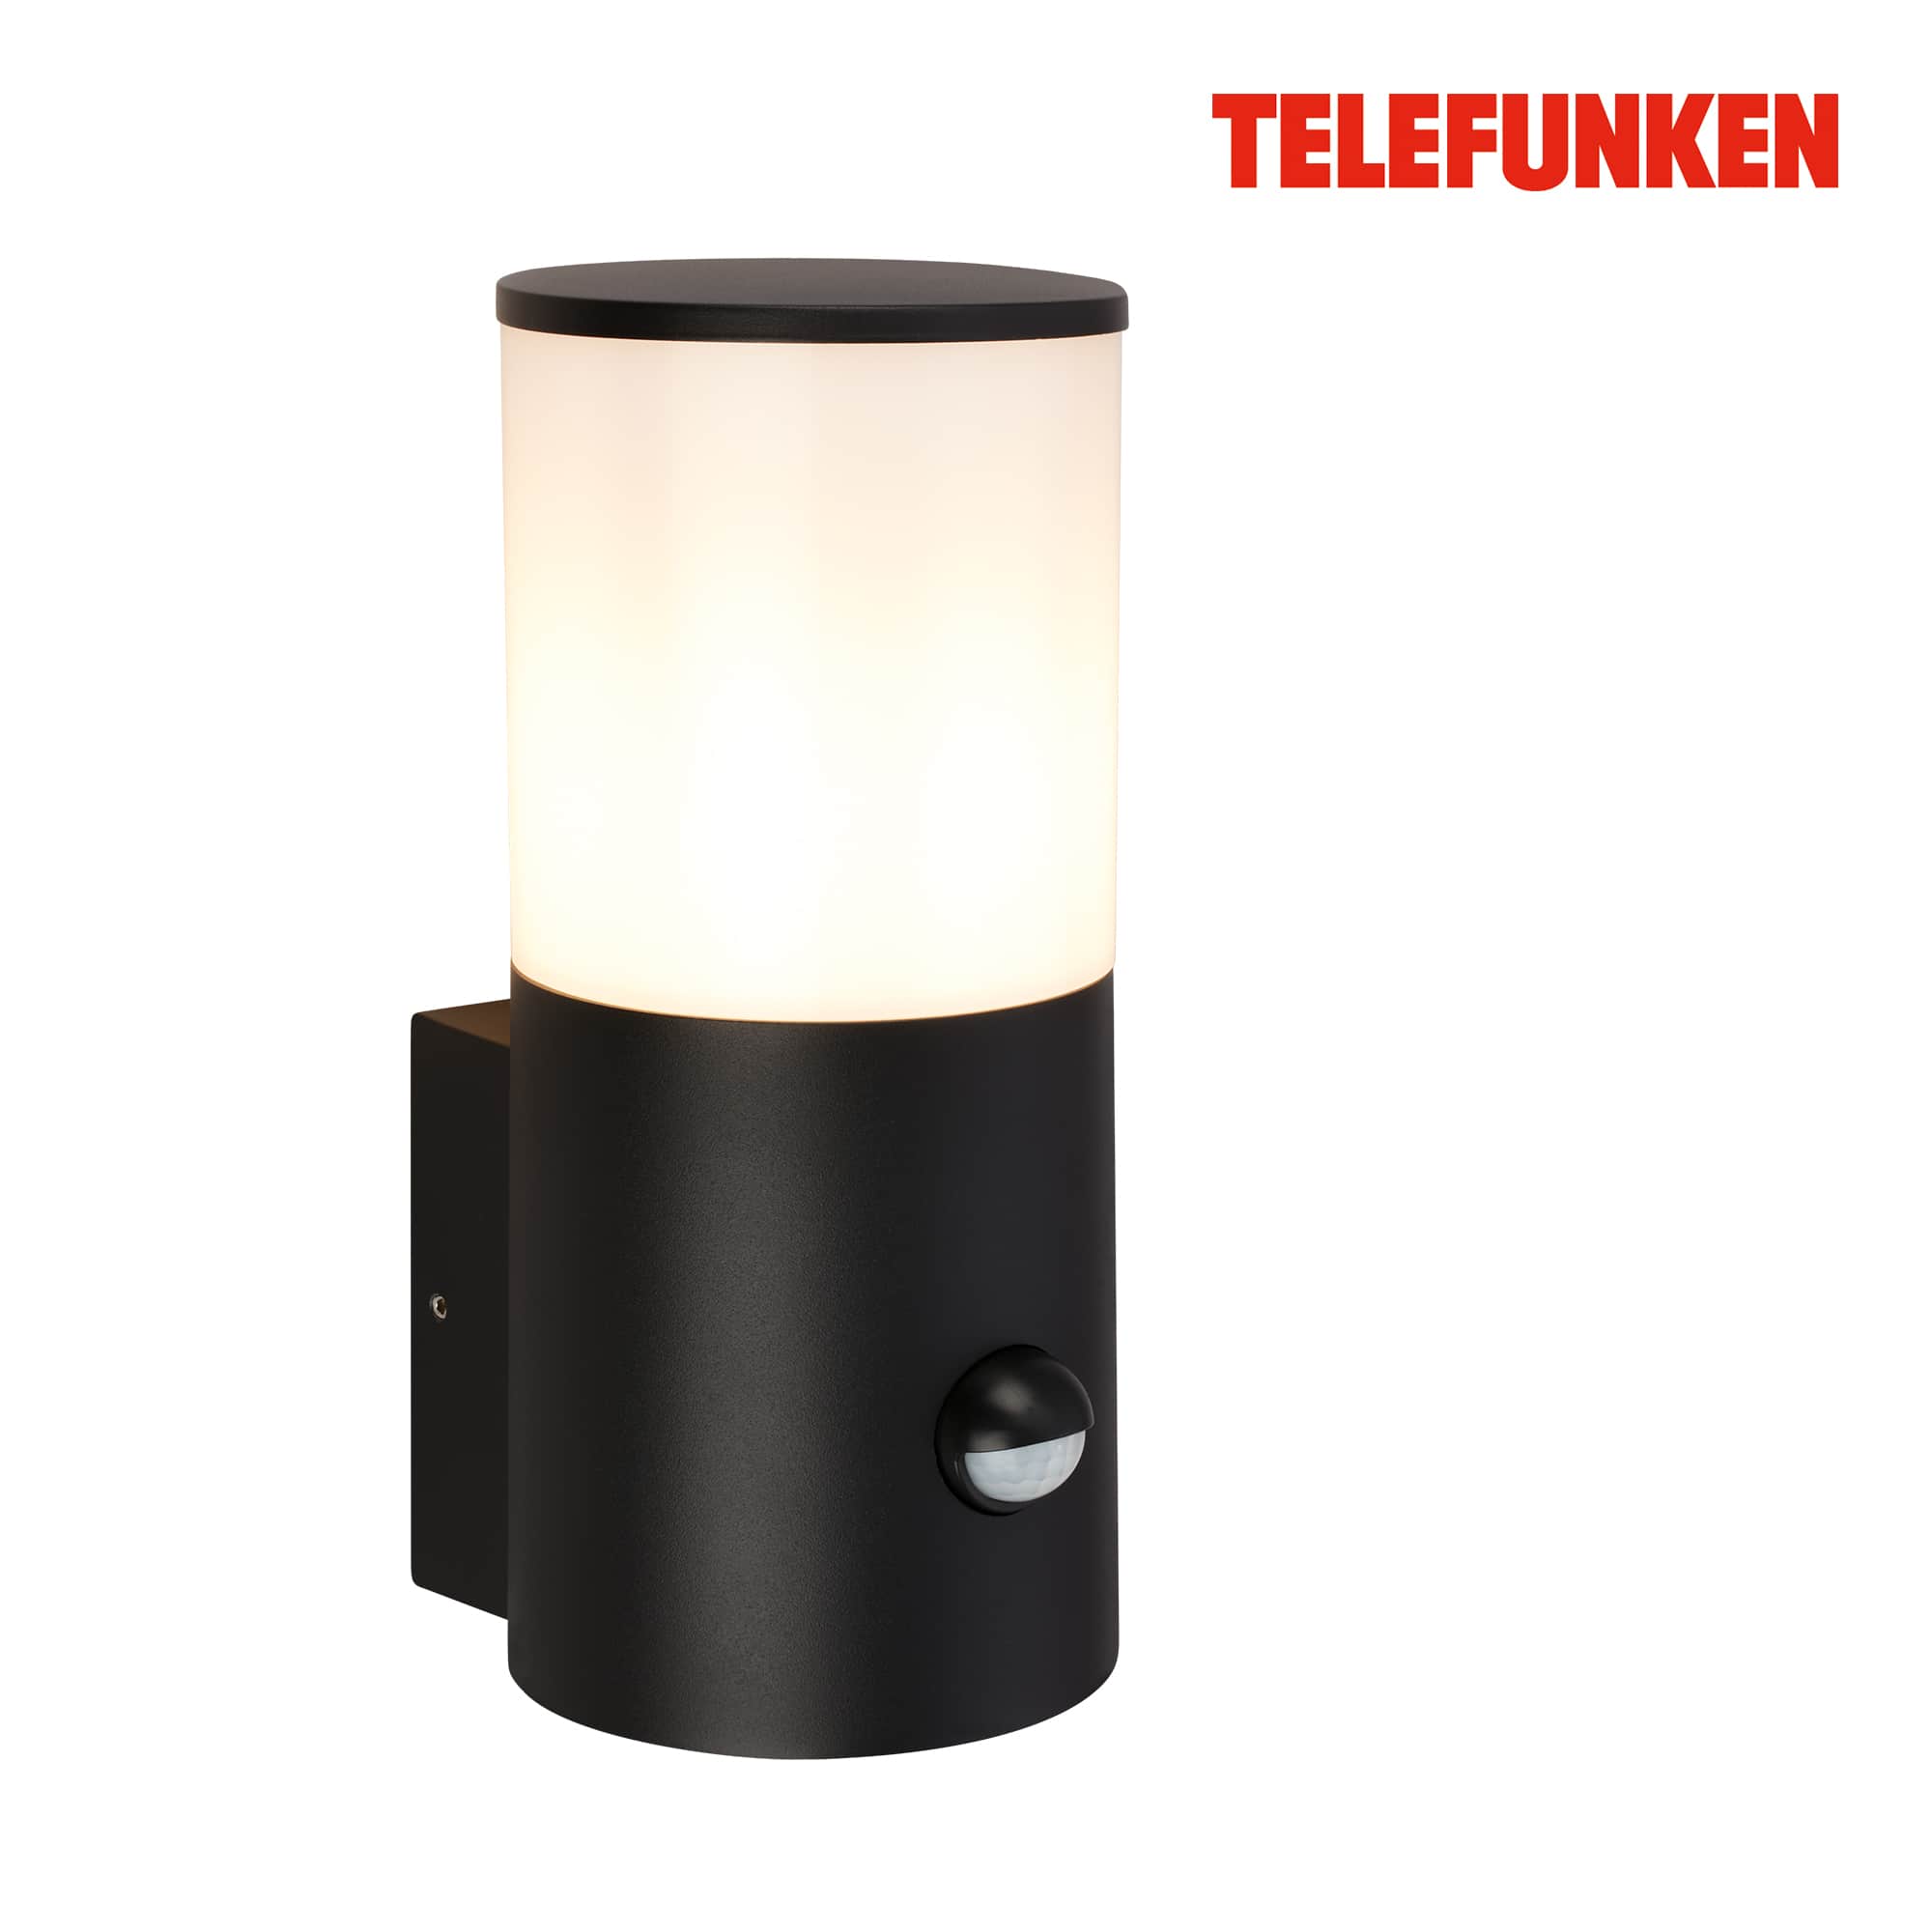 Telefunken LED wall lamp, motion detector, splash water protection